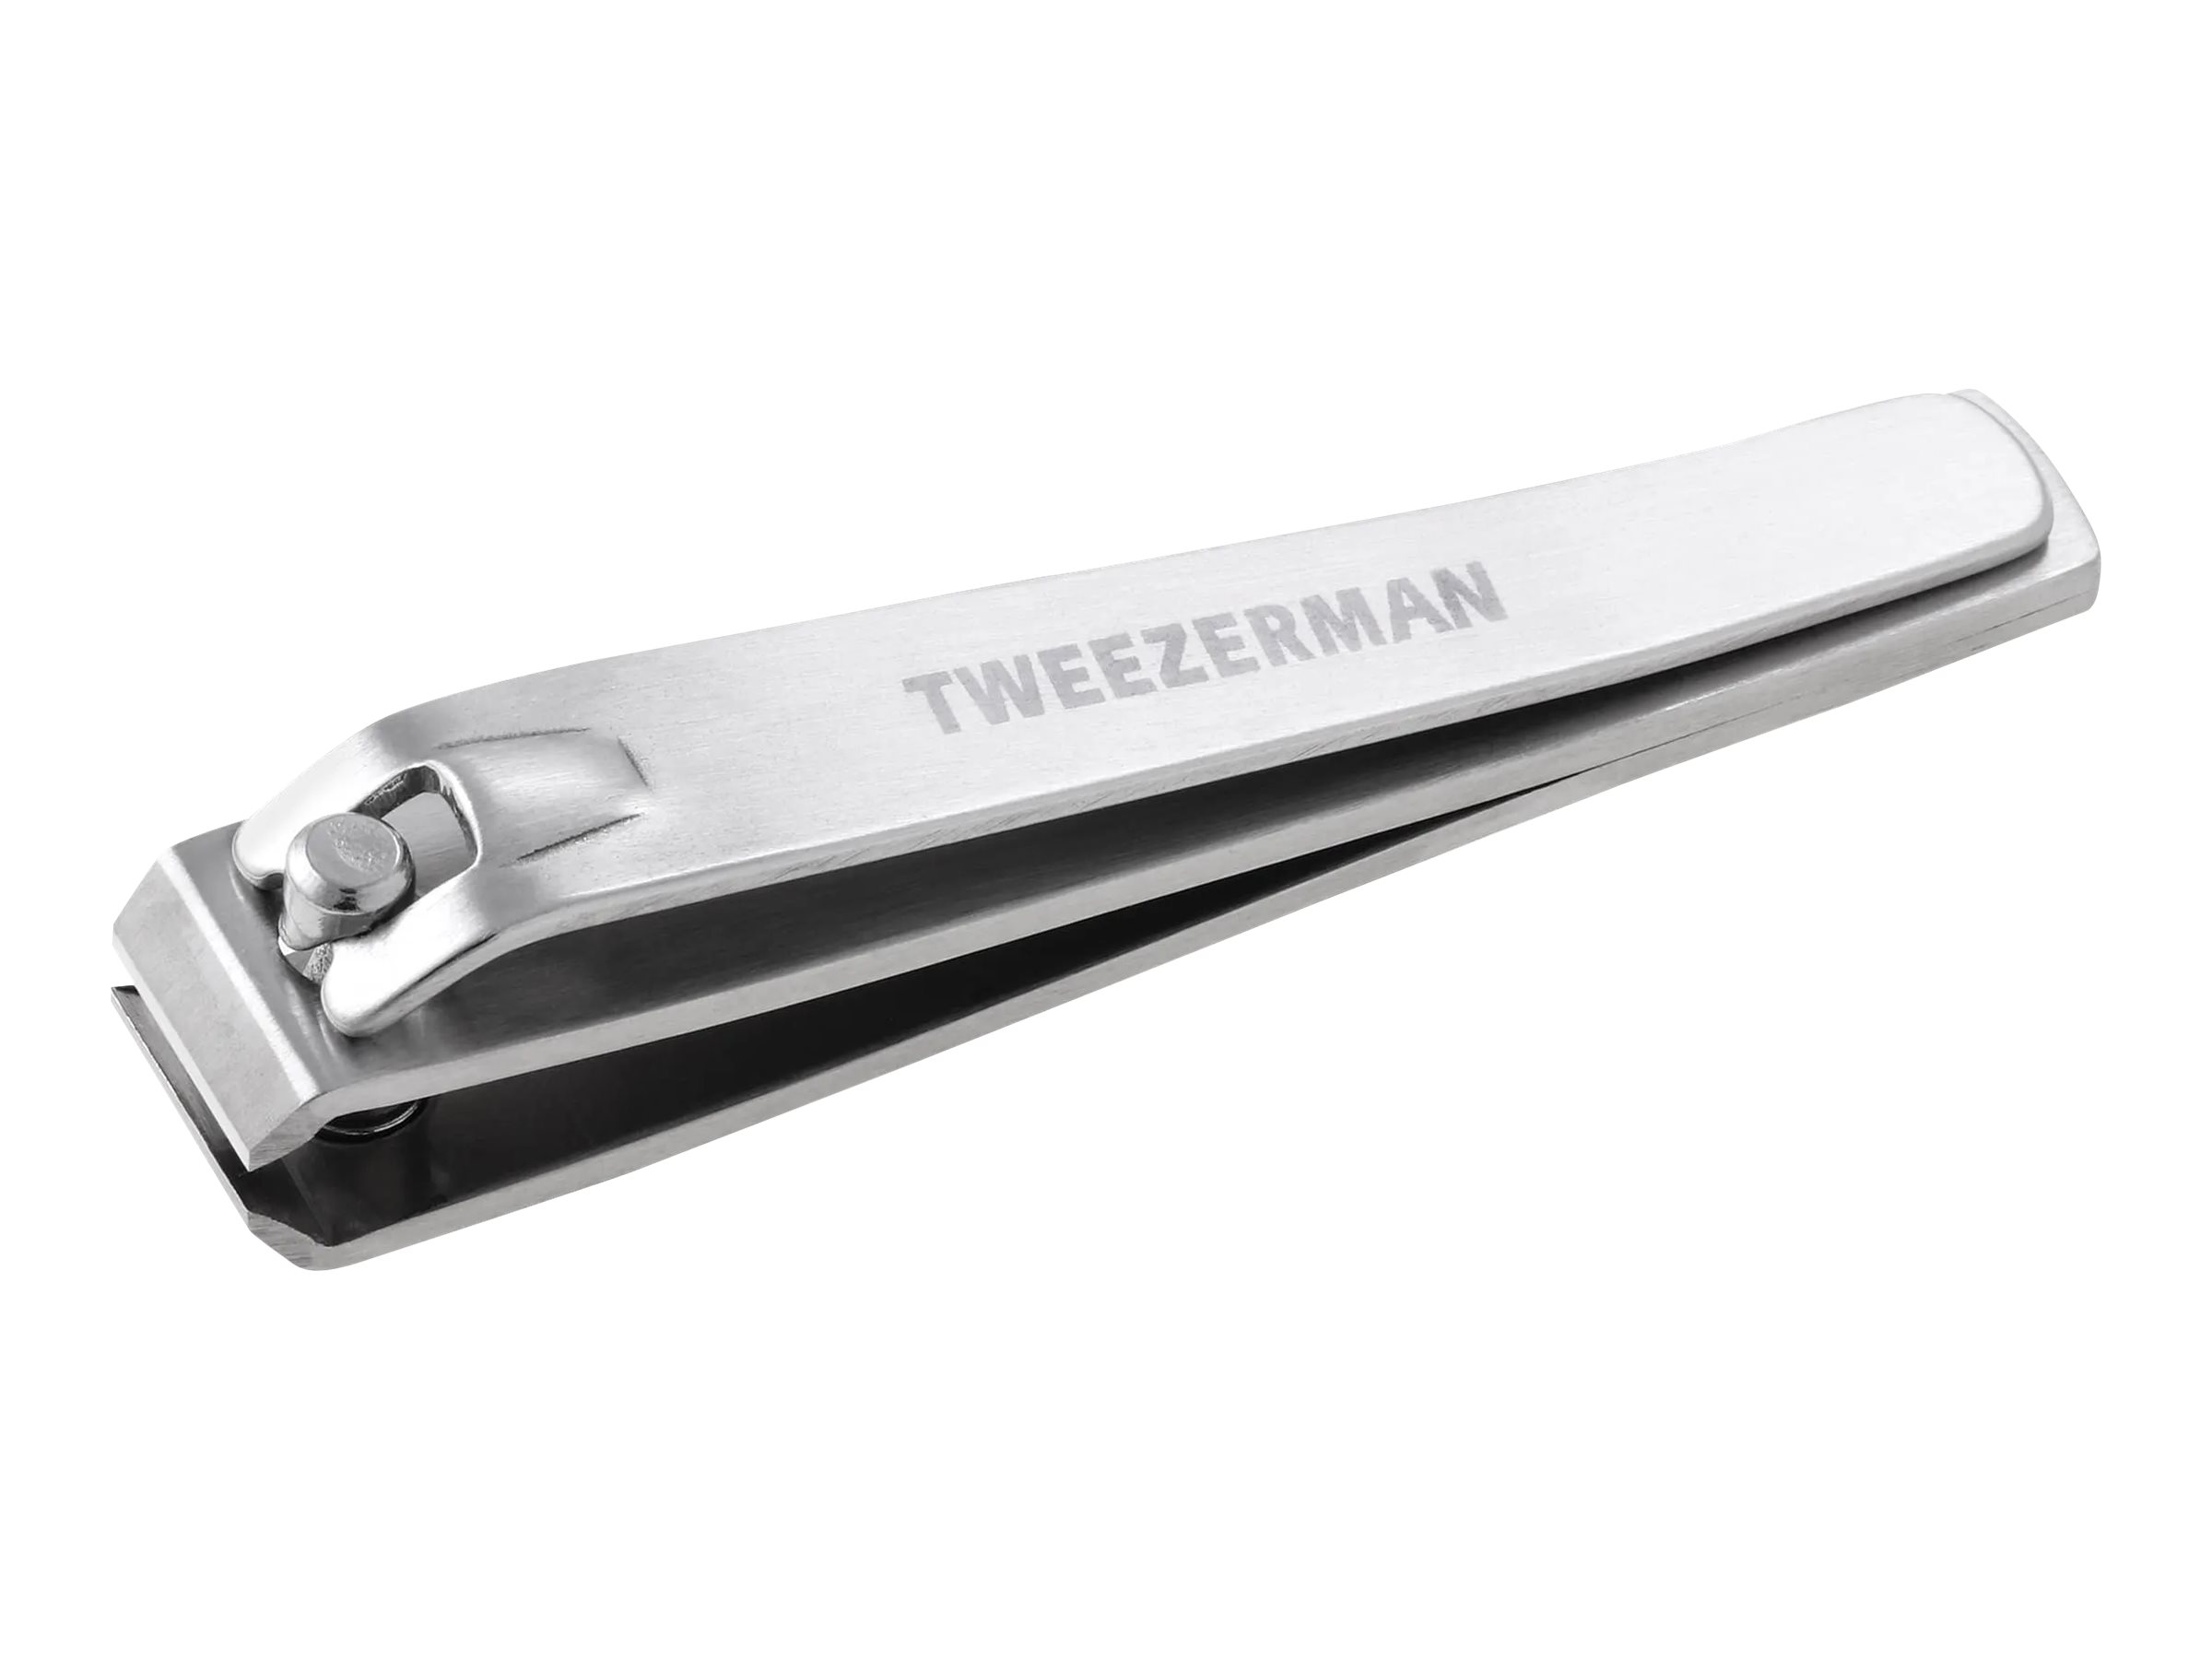 Tweezerman Toenail Clippers - Stainless Steel